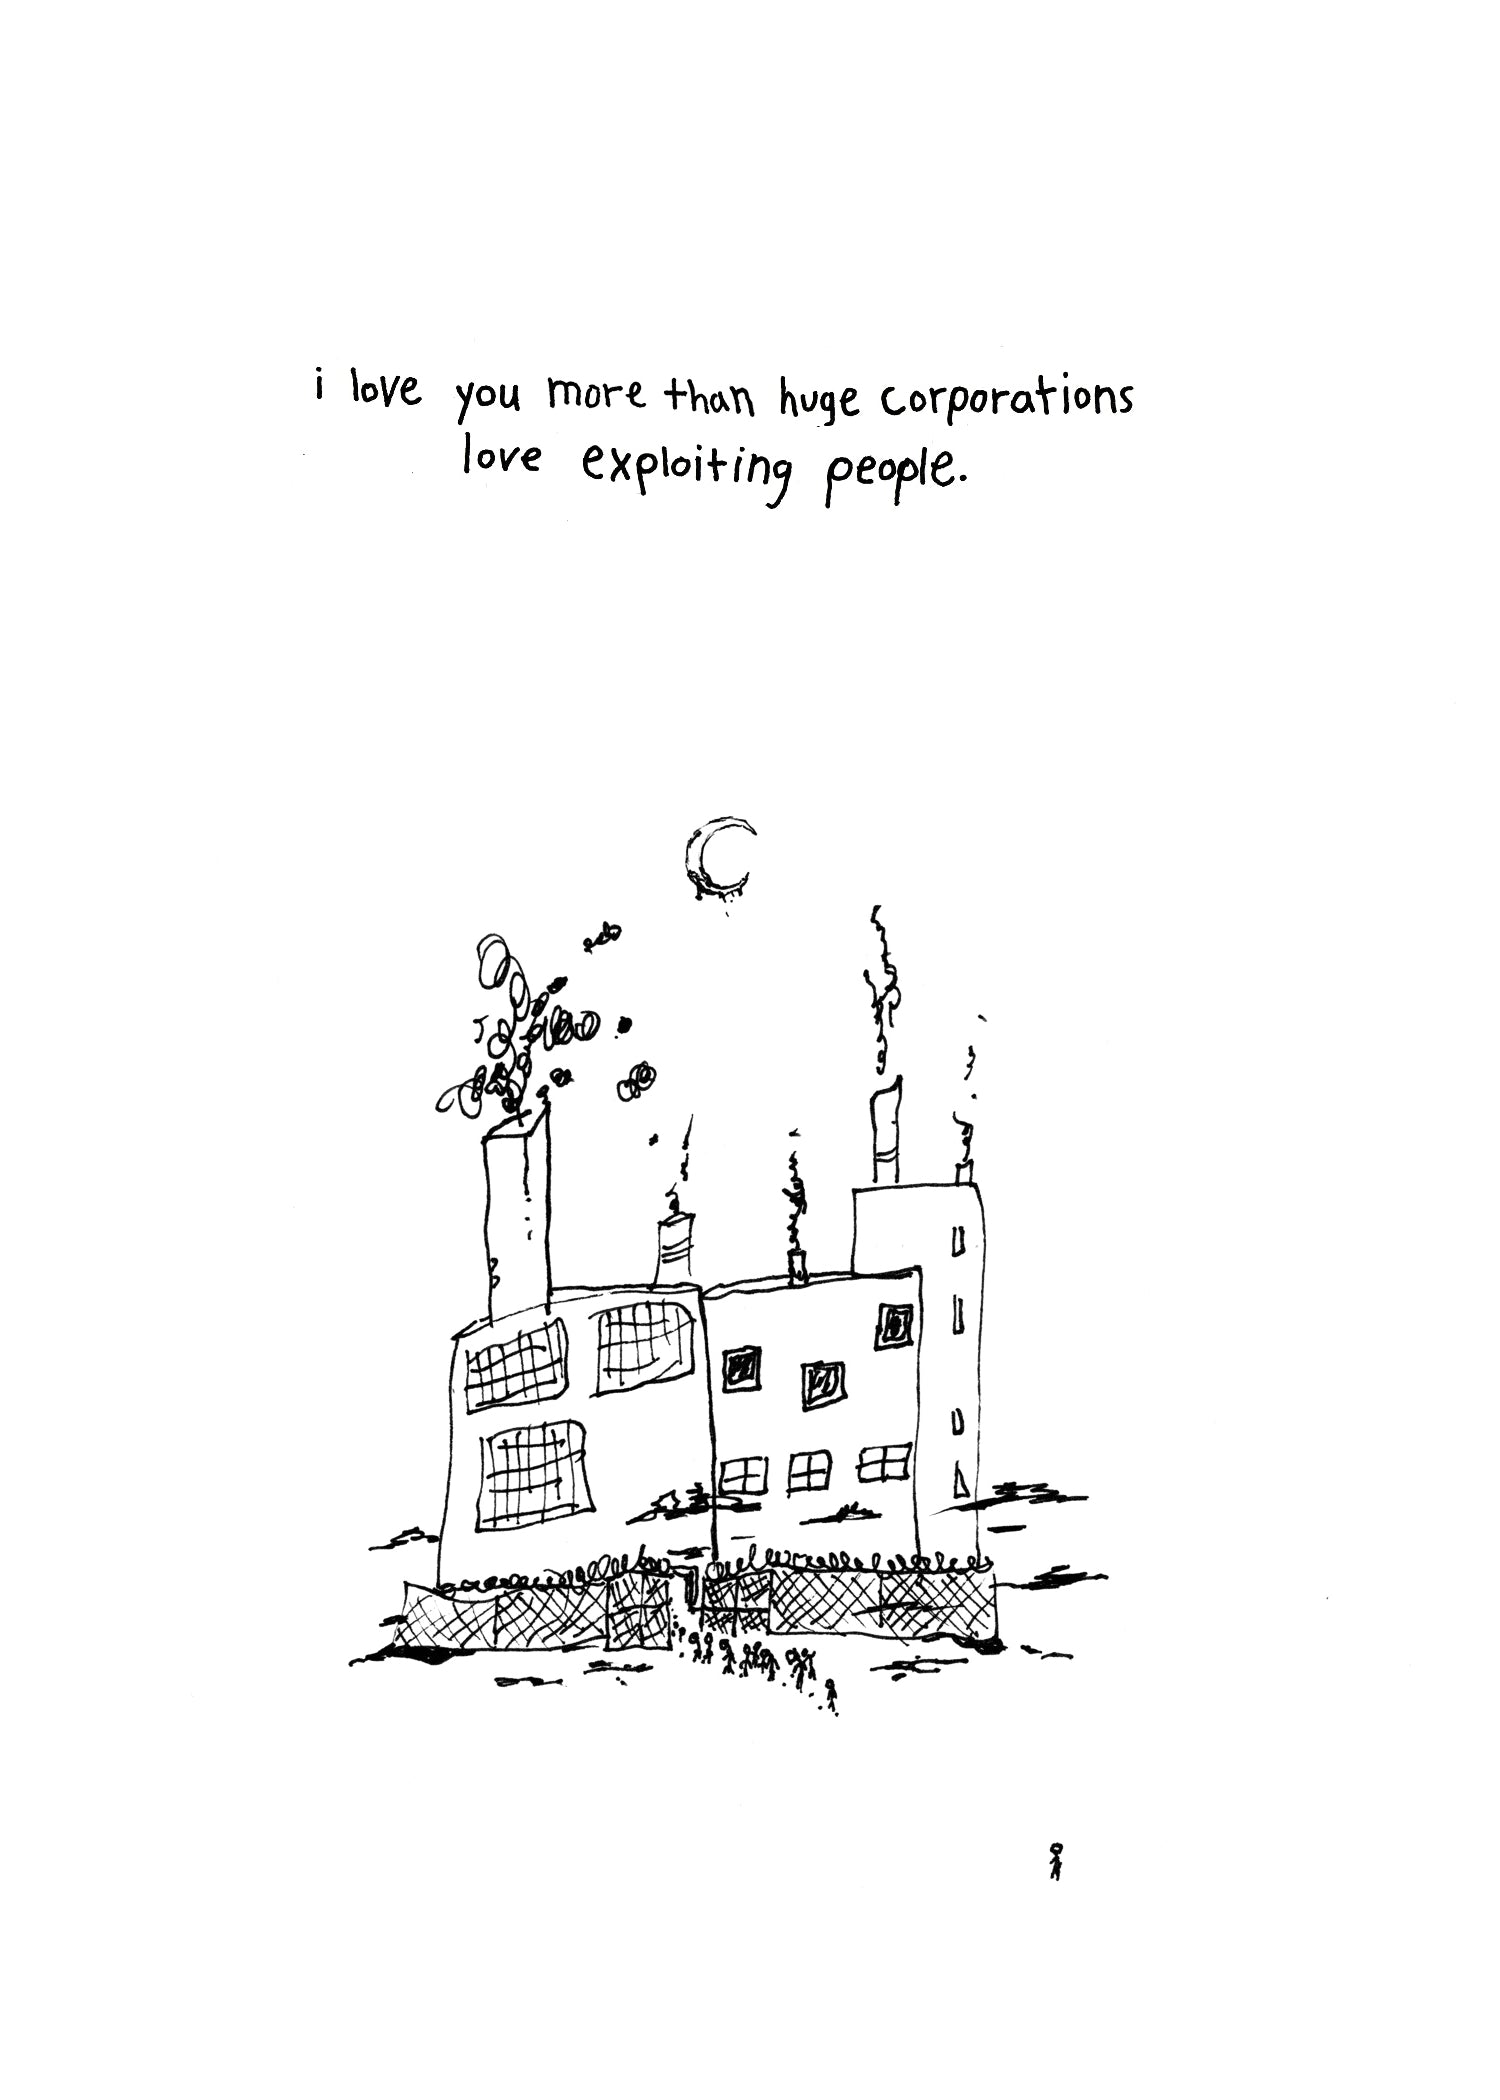 Huge Corporations